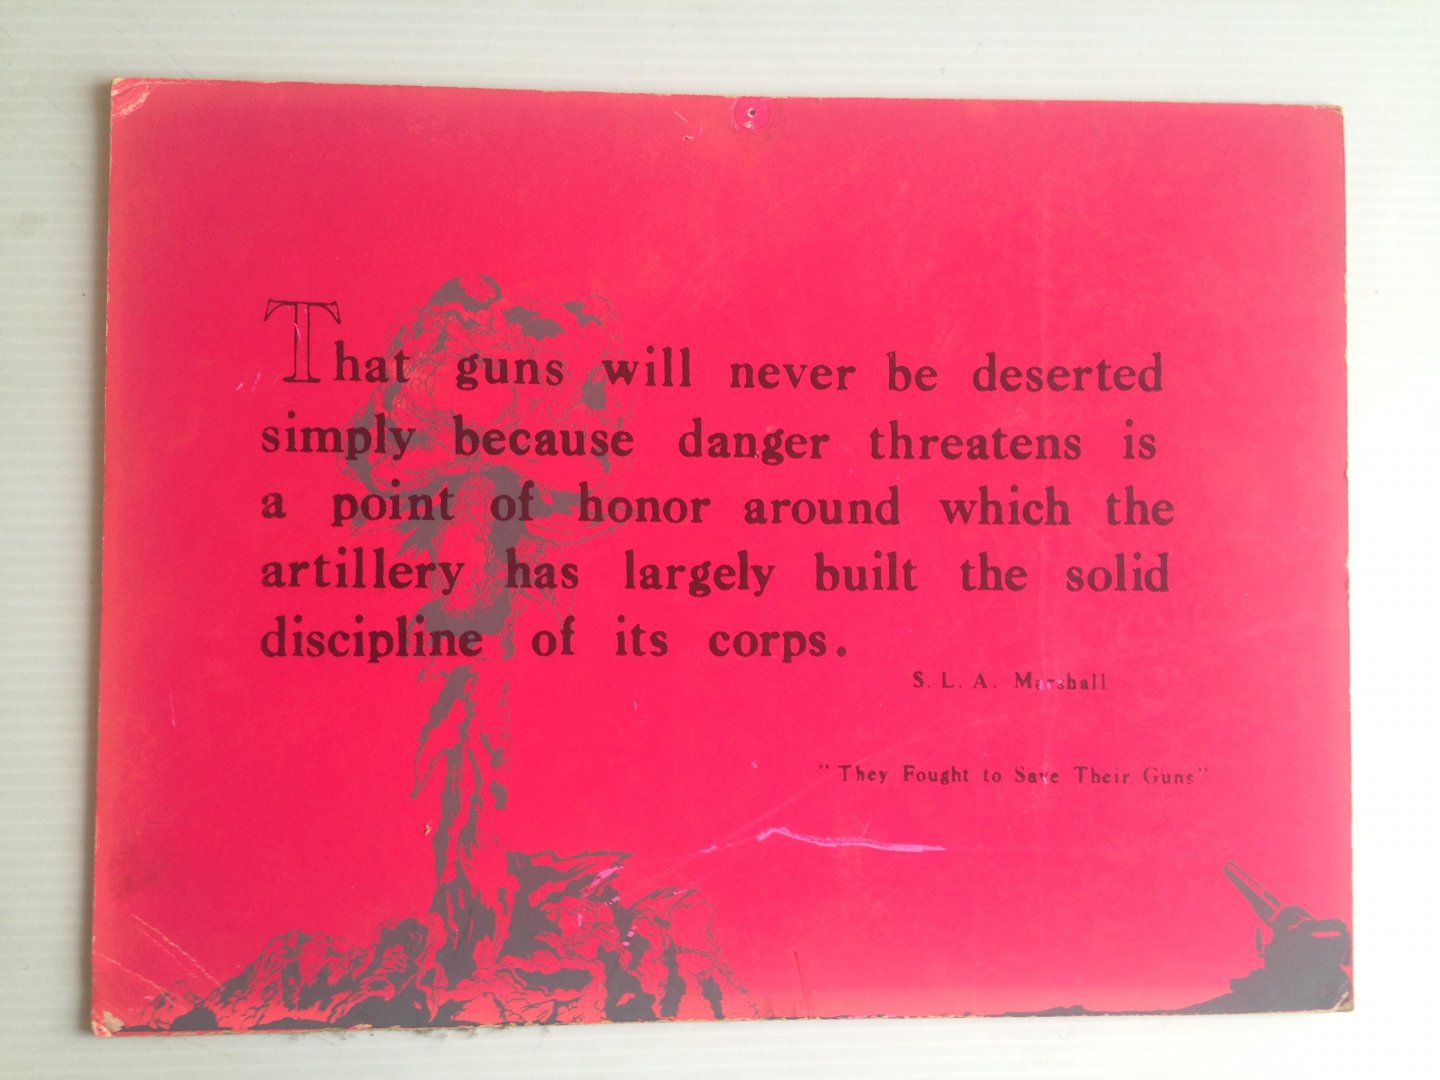  - Plaat nr 3 met uitspraak van S.L.A. Marshall, Chief US Army combat  historian